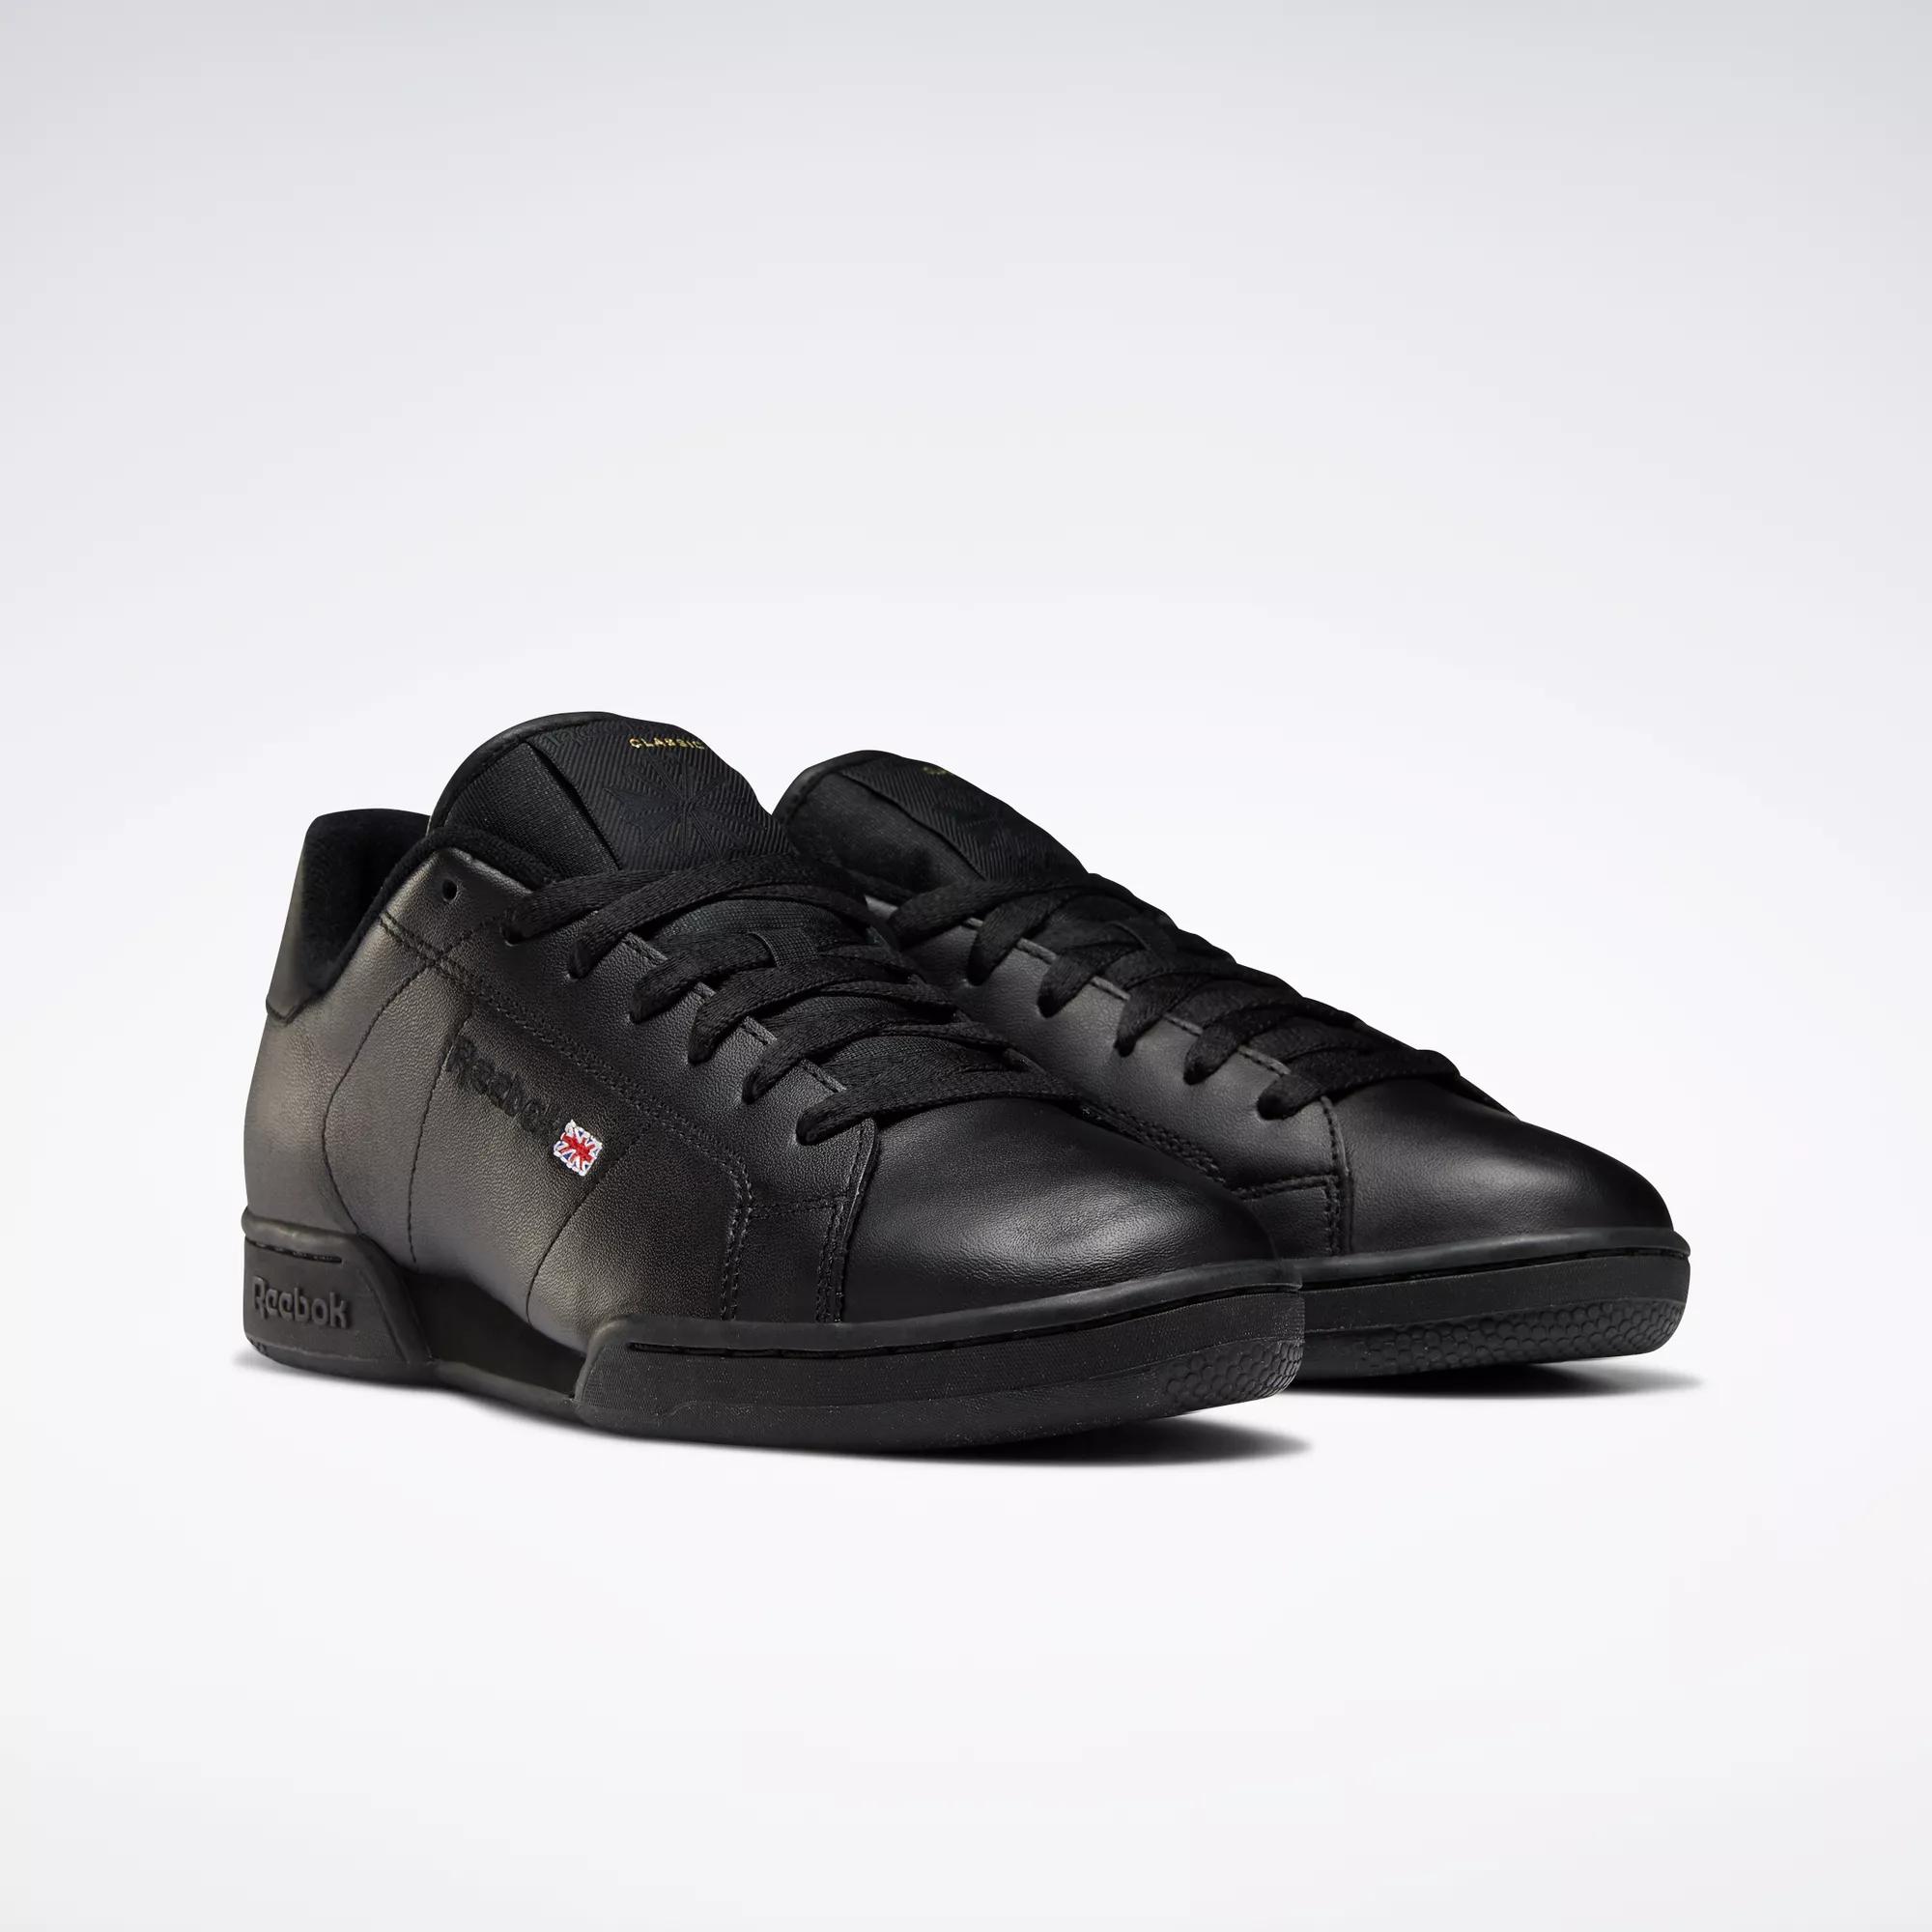 Mand fest elite NPC II Men's Shoes - Black | Reebok